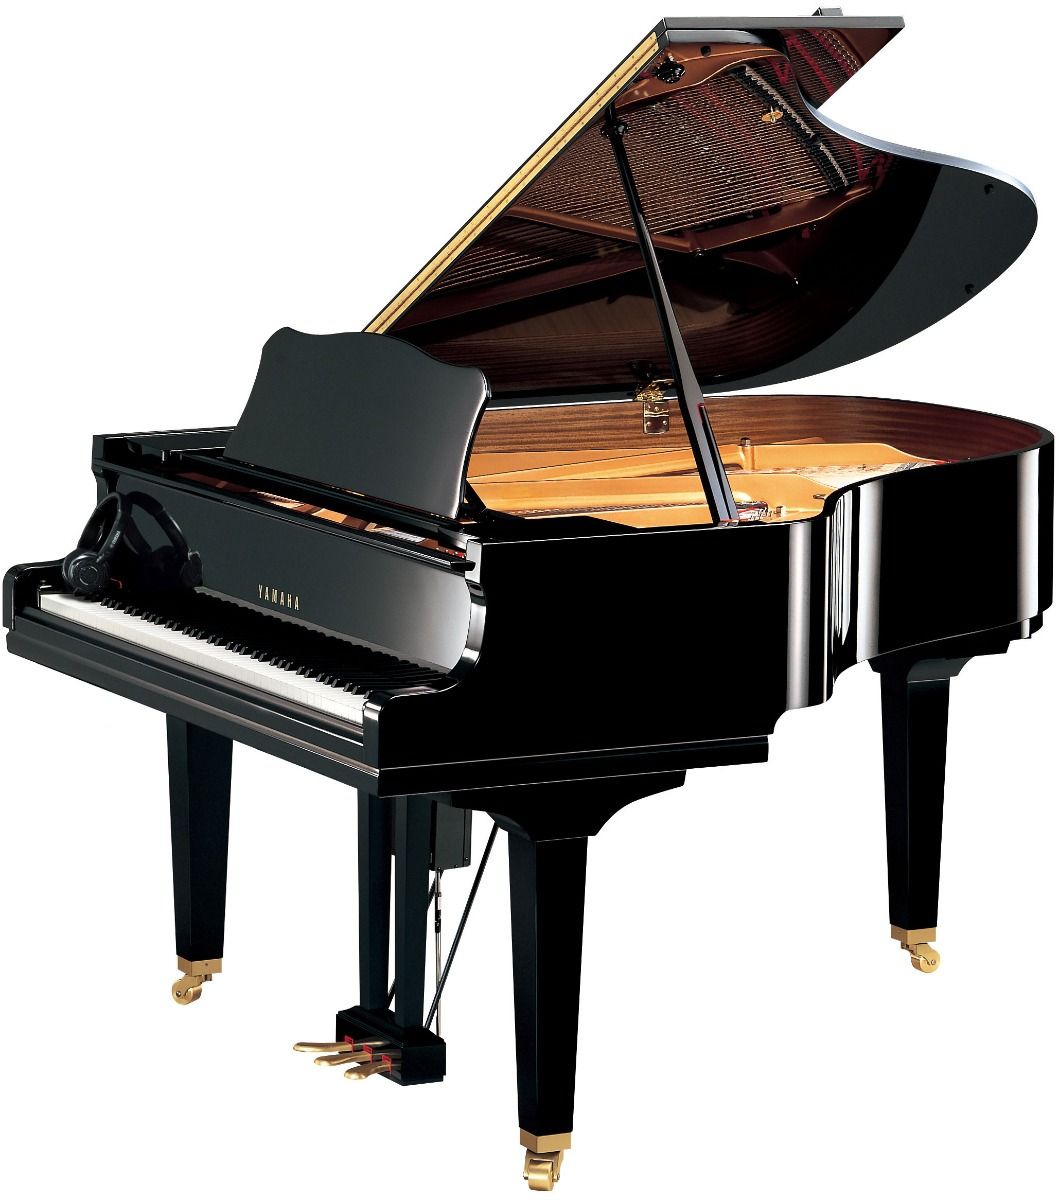 Yamaha DGC2 ENST 5'8" Enspire ST Disklavier Piano in Polished Ebony